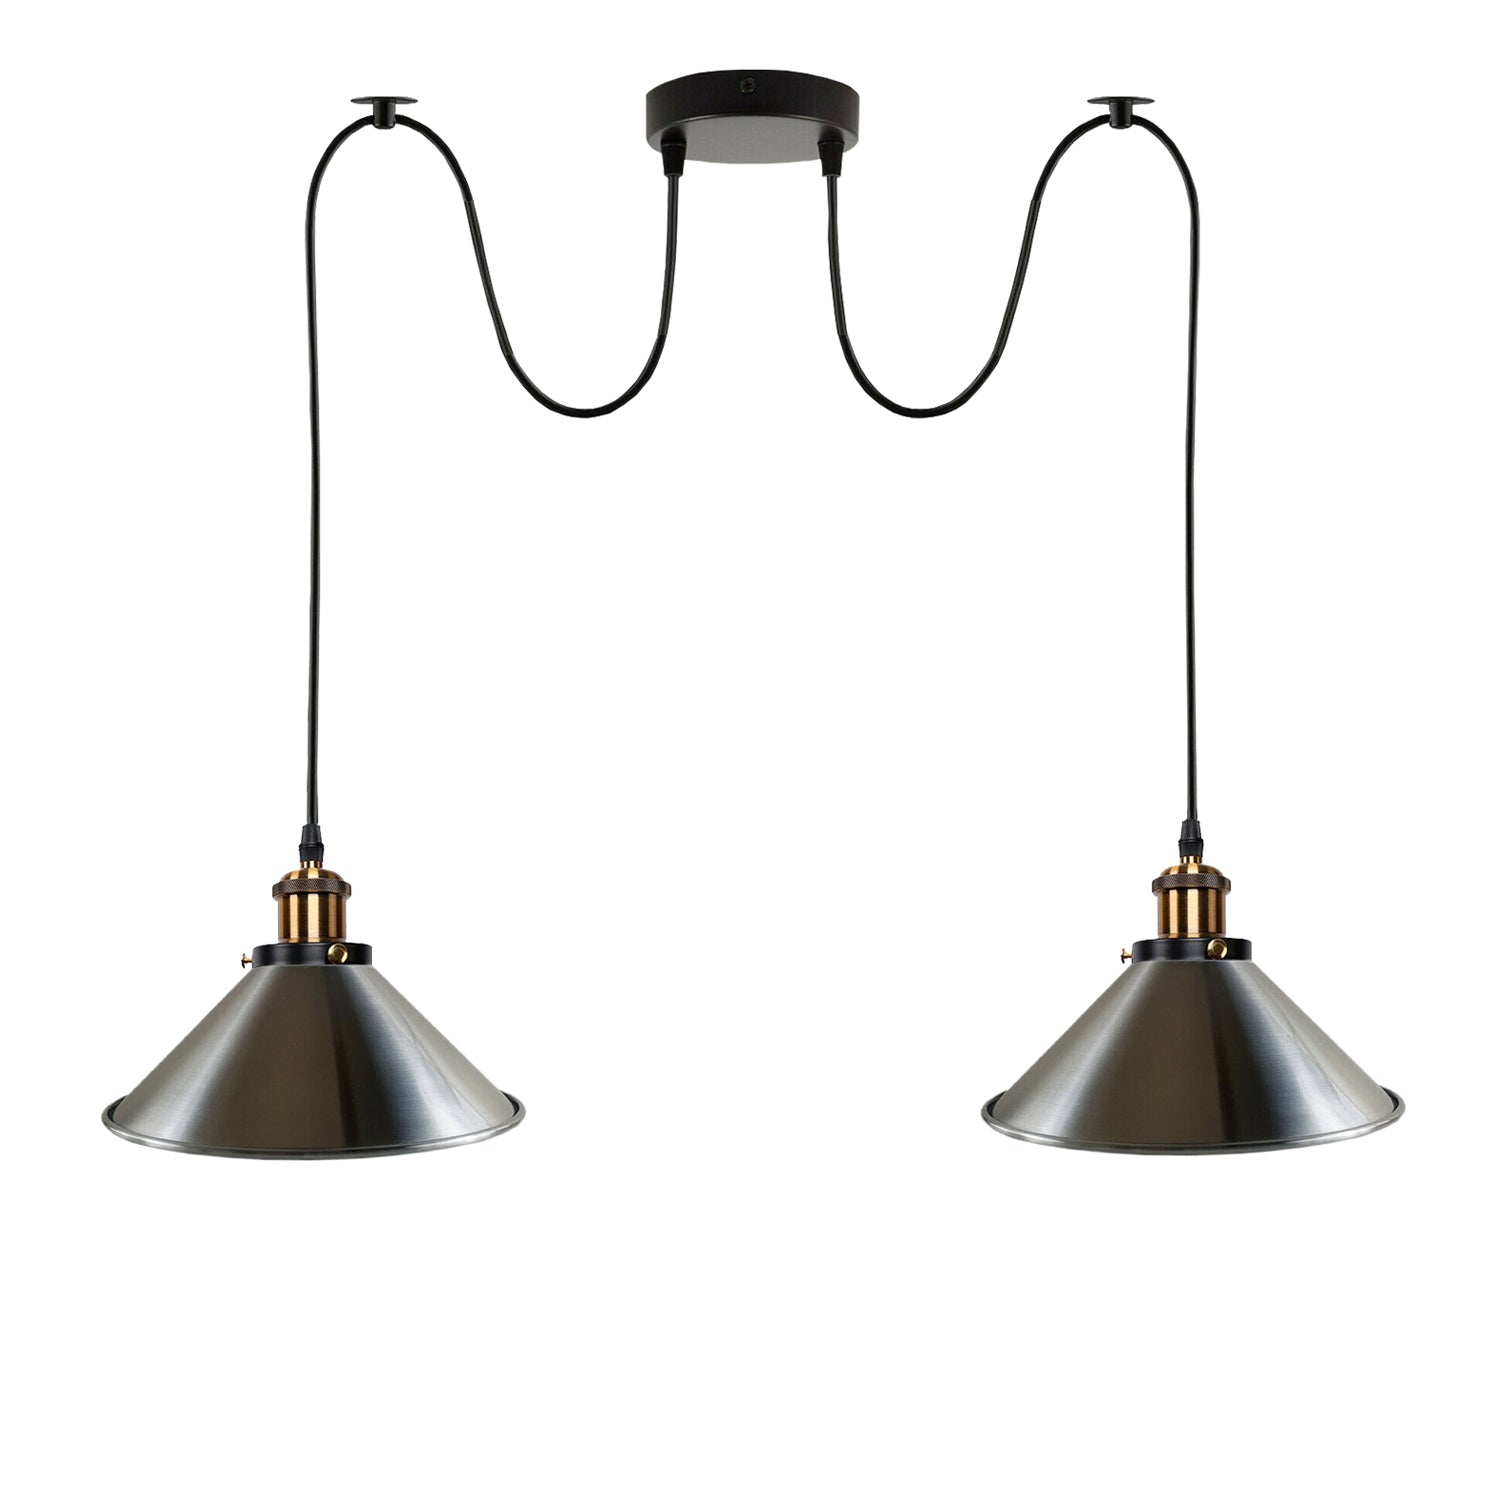 Stain Nickel 2 Way Retro Industrial Ceiling E27 Hanging Lamp Pendant Light~3508 - LEDSone UK Ltd